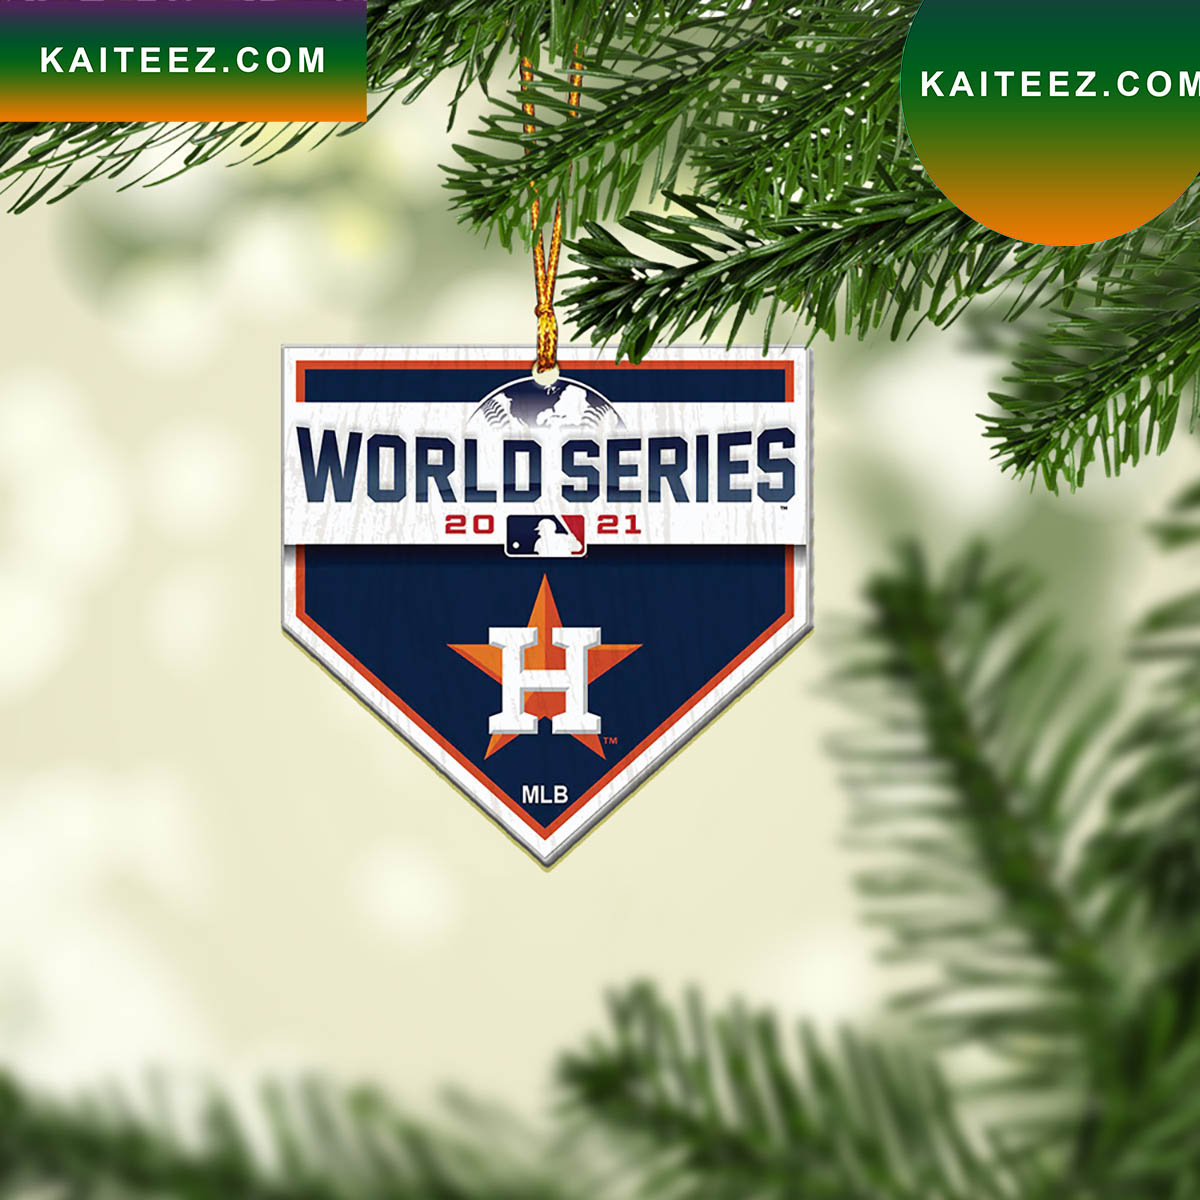 Houston Astros Christmas Tree Baseball Teams 2021 Merry Christmas shirt -  Kingteeshop